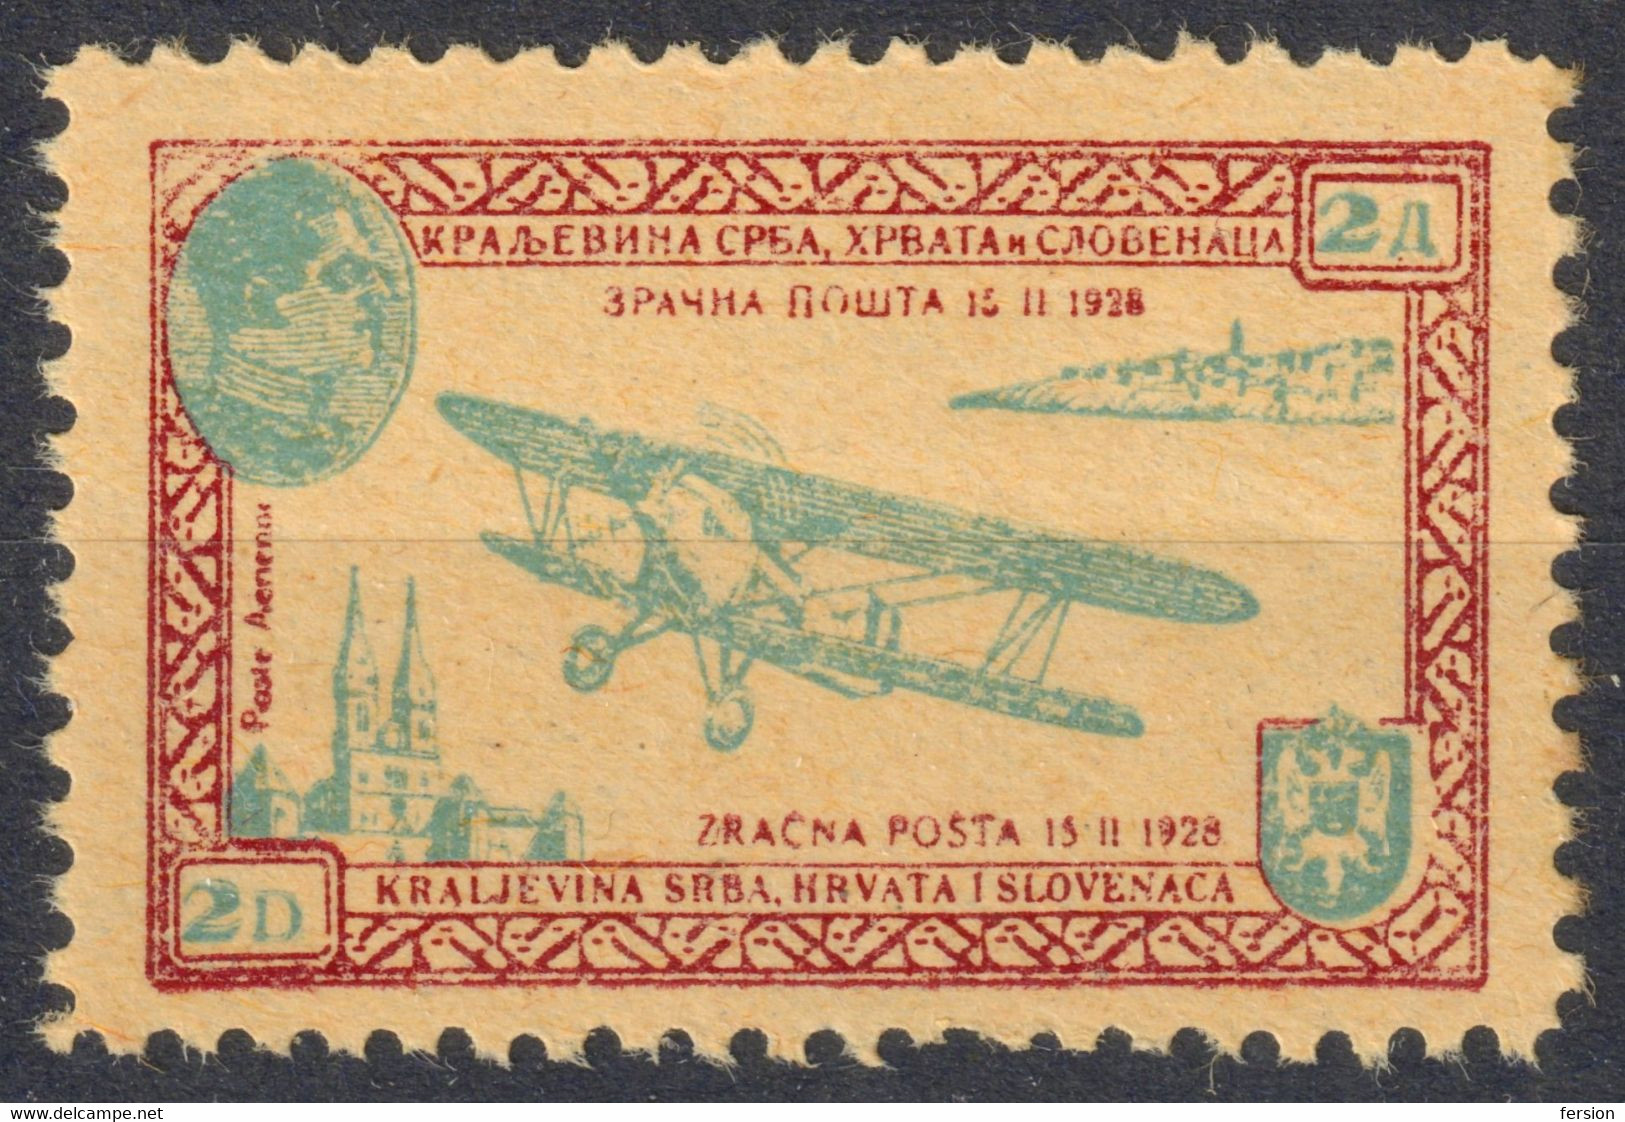 ESSAY Croatia Yugoslavia SHS 1928 AIRPLANE Biplane Zagreb Cathedal Church Zracna Posta Air Mail Par Avion King Alexander - Posta Aerea